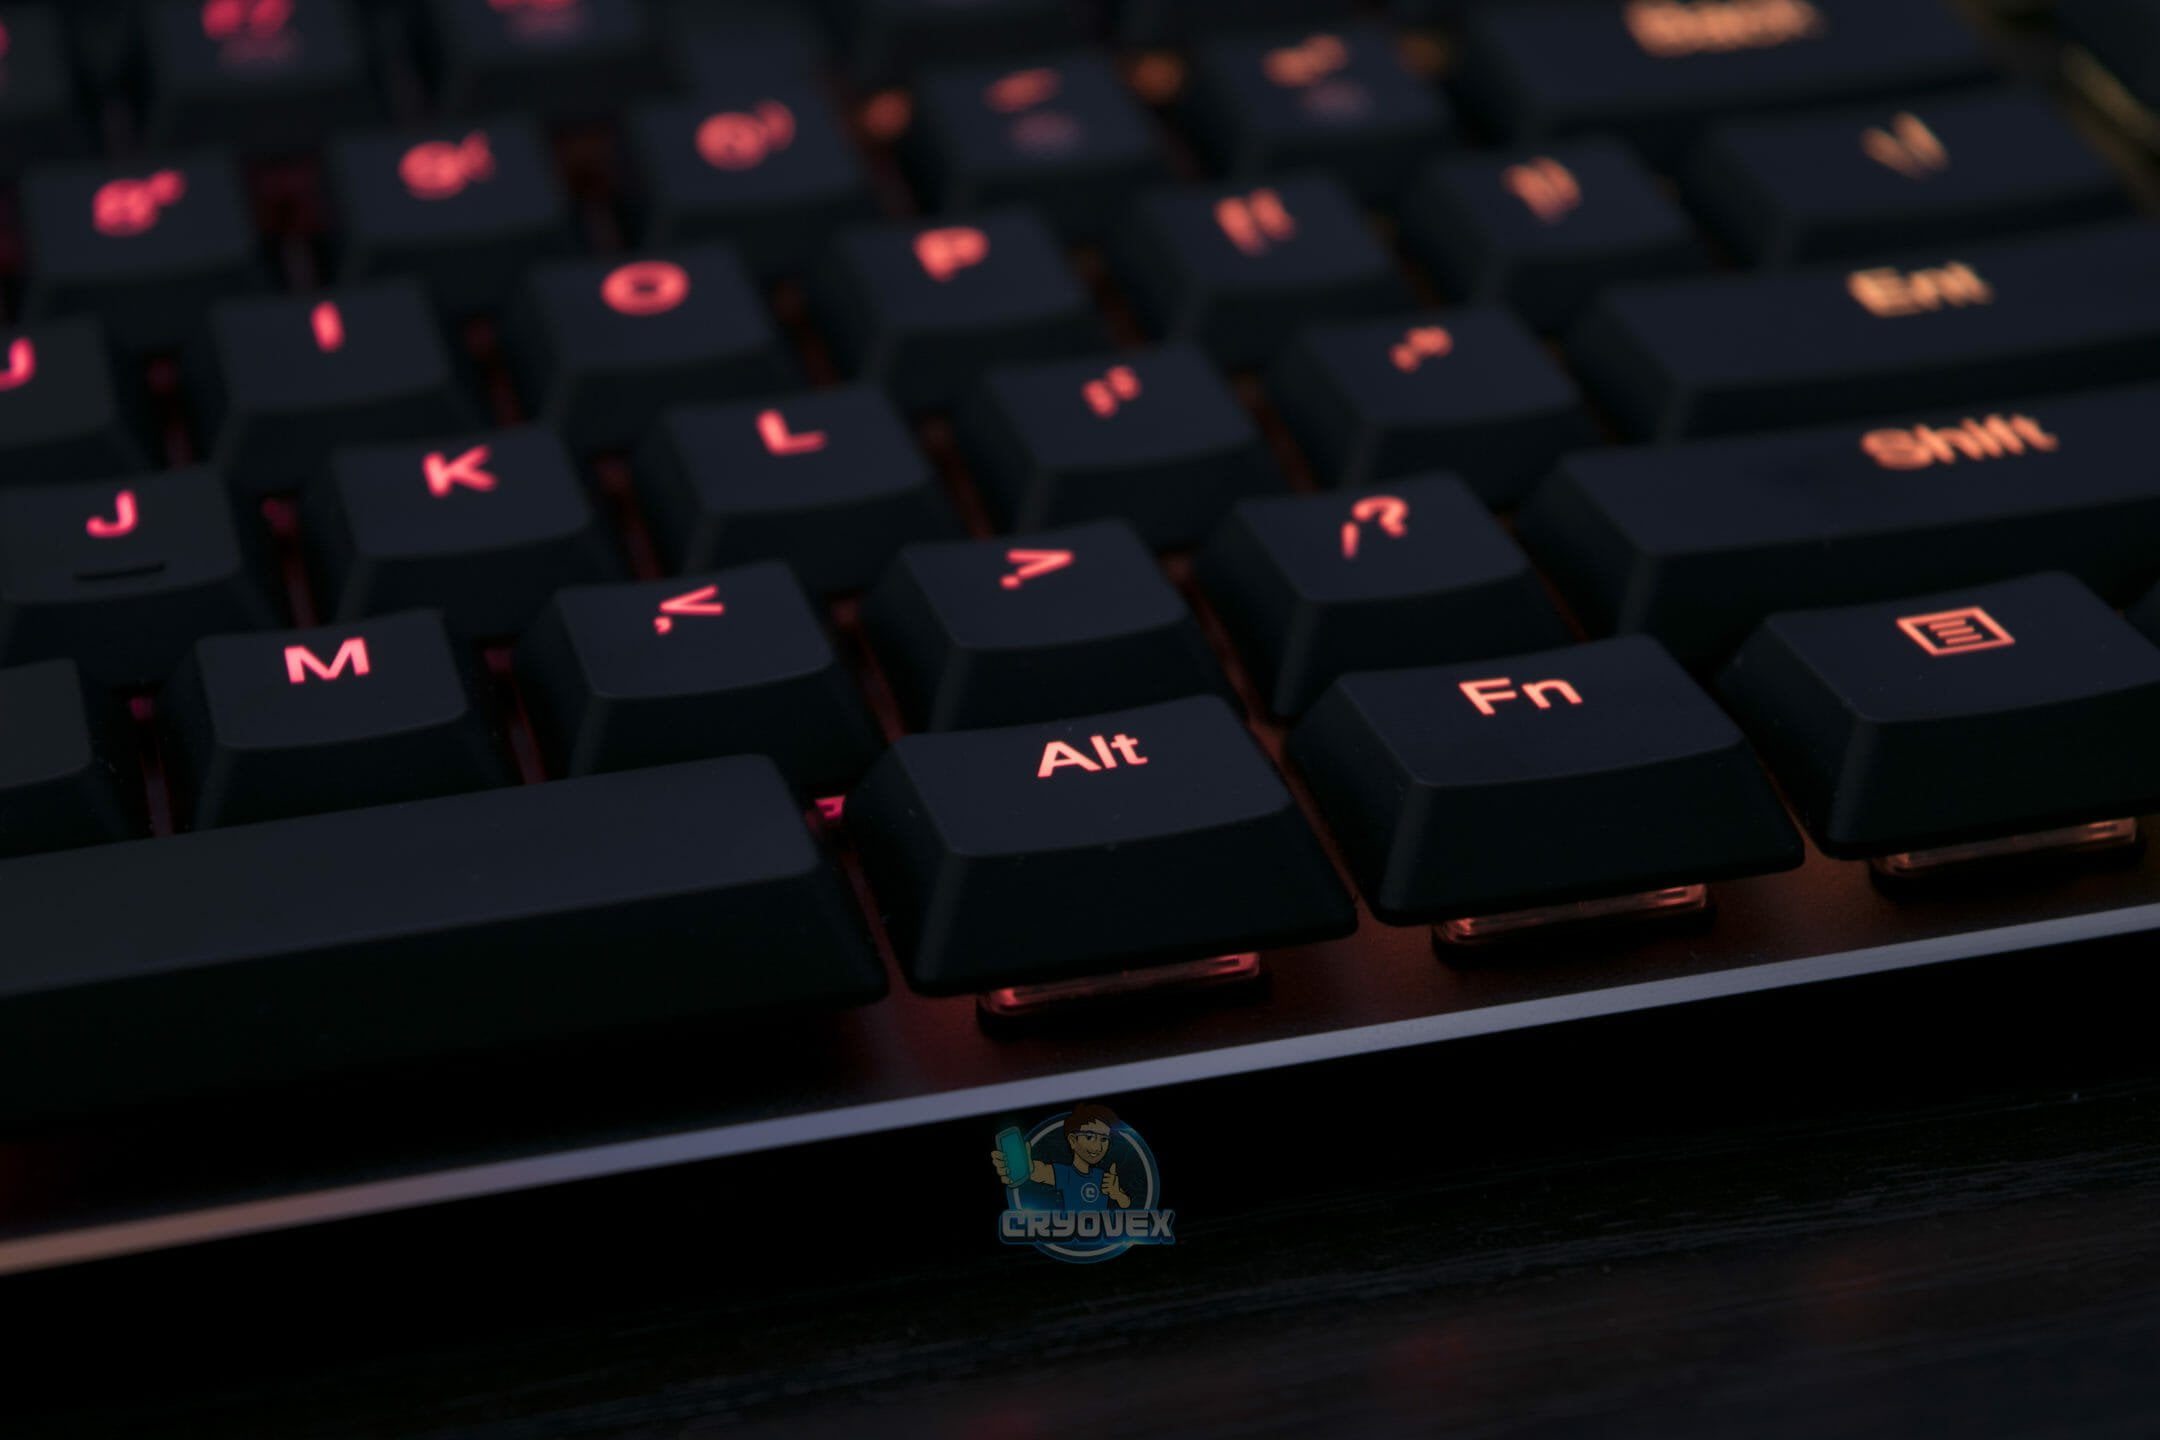 Mechanical Gaming Keyboard Under $100 With Rgb Lighting?